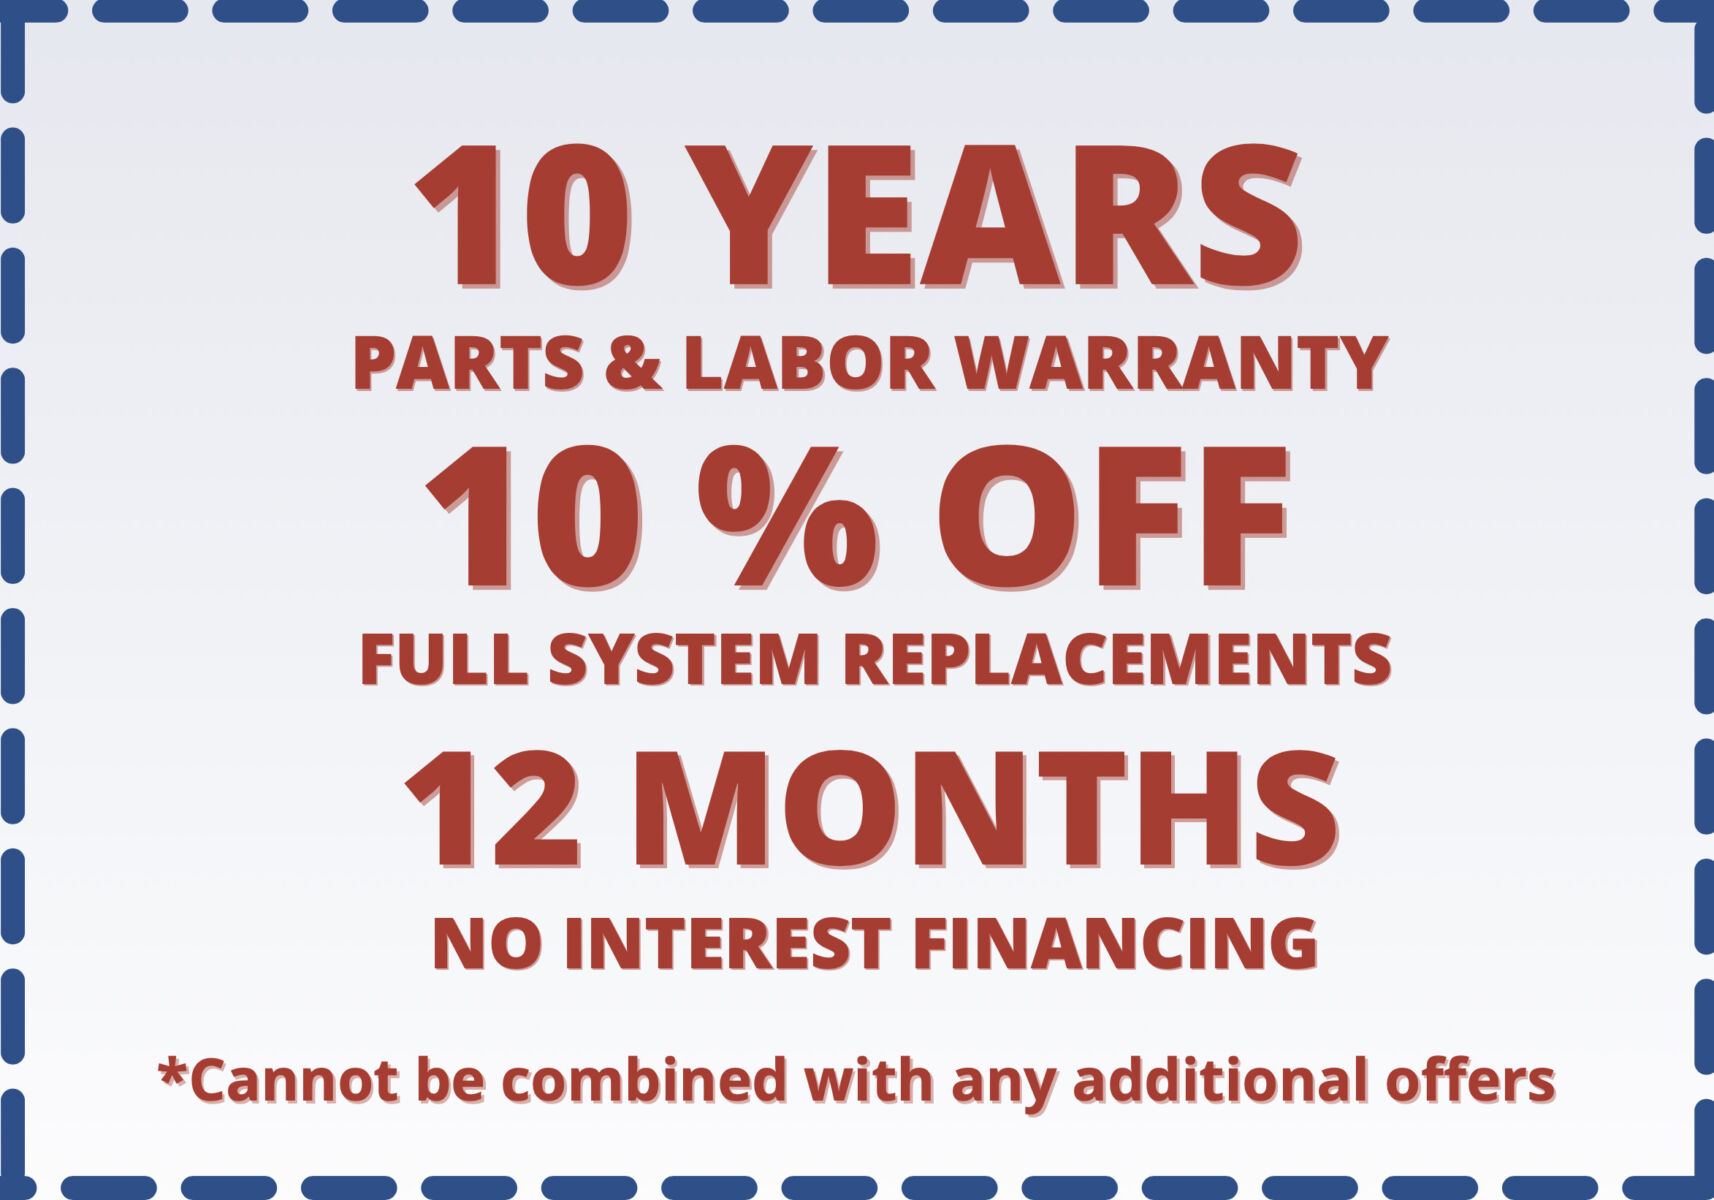 10 Years Parts & Labor Warranty / 10% Off / 12 Months 0% Interest